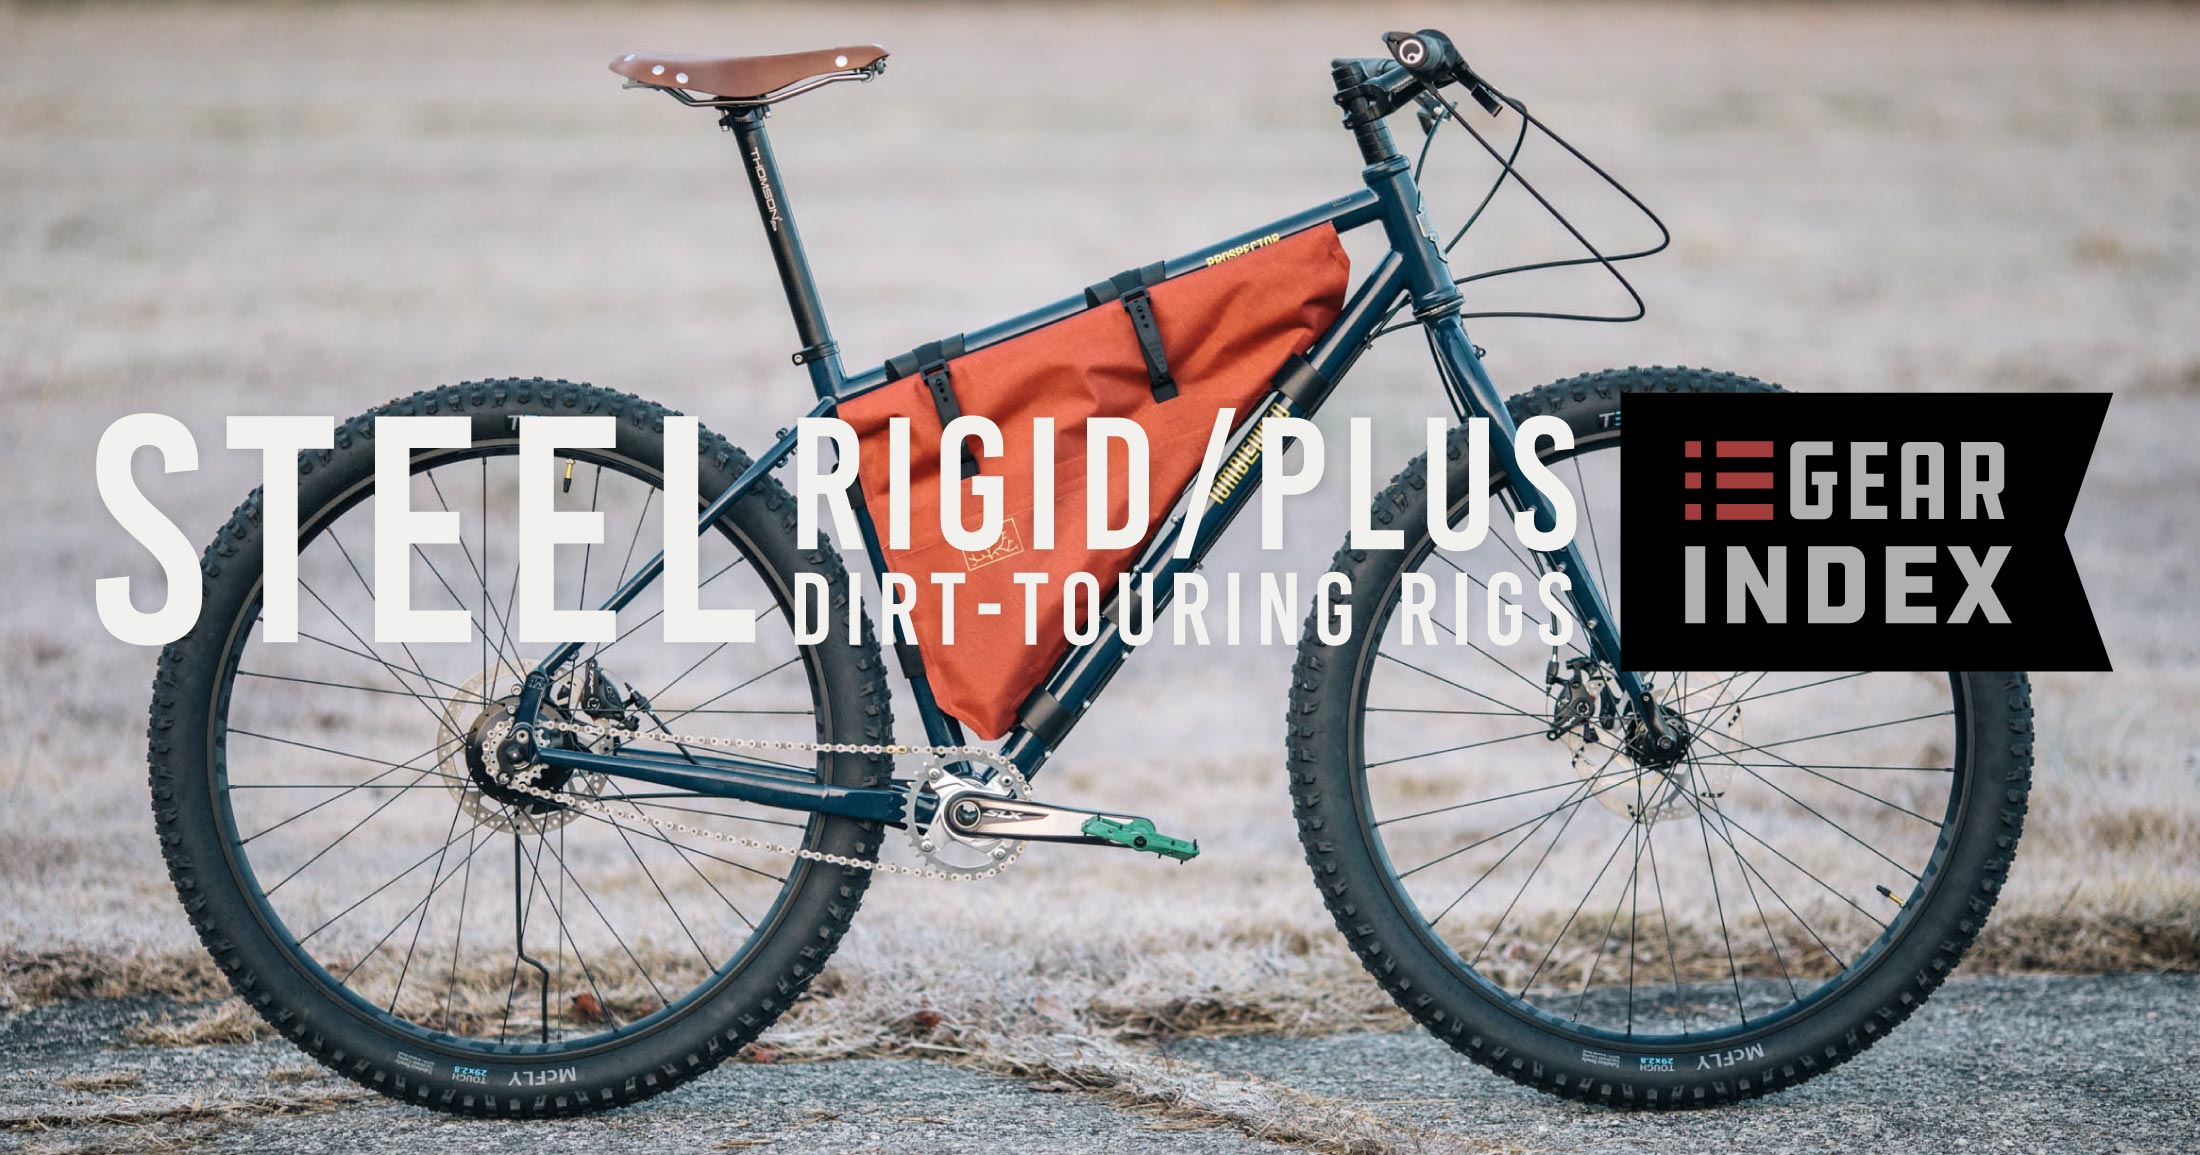 Rigid Steel Off-road Touring Bikes